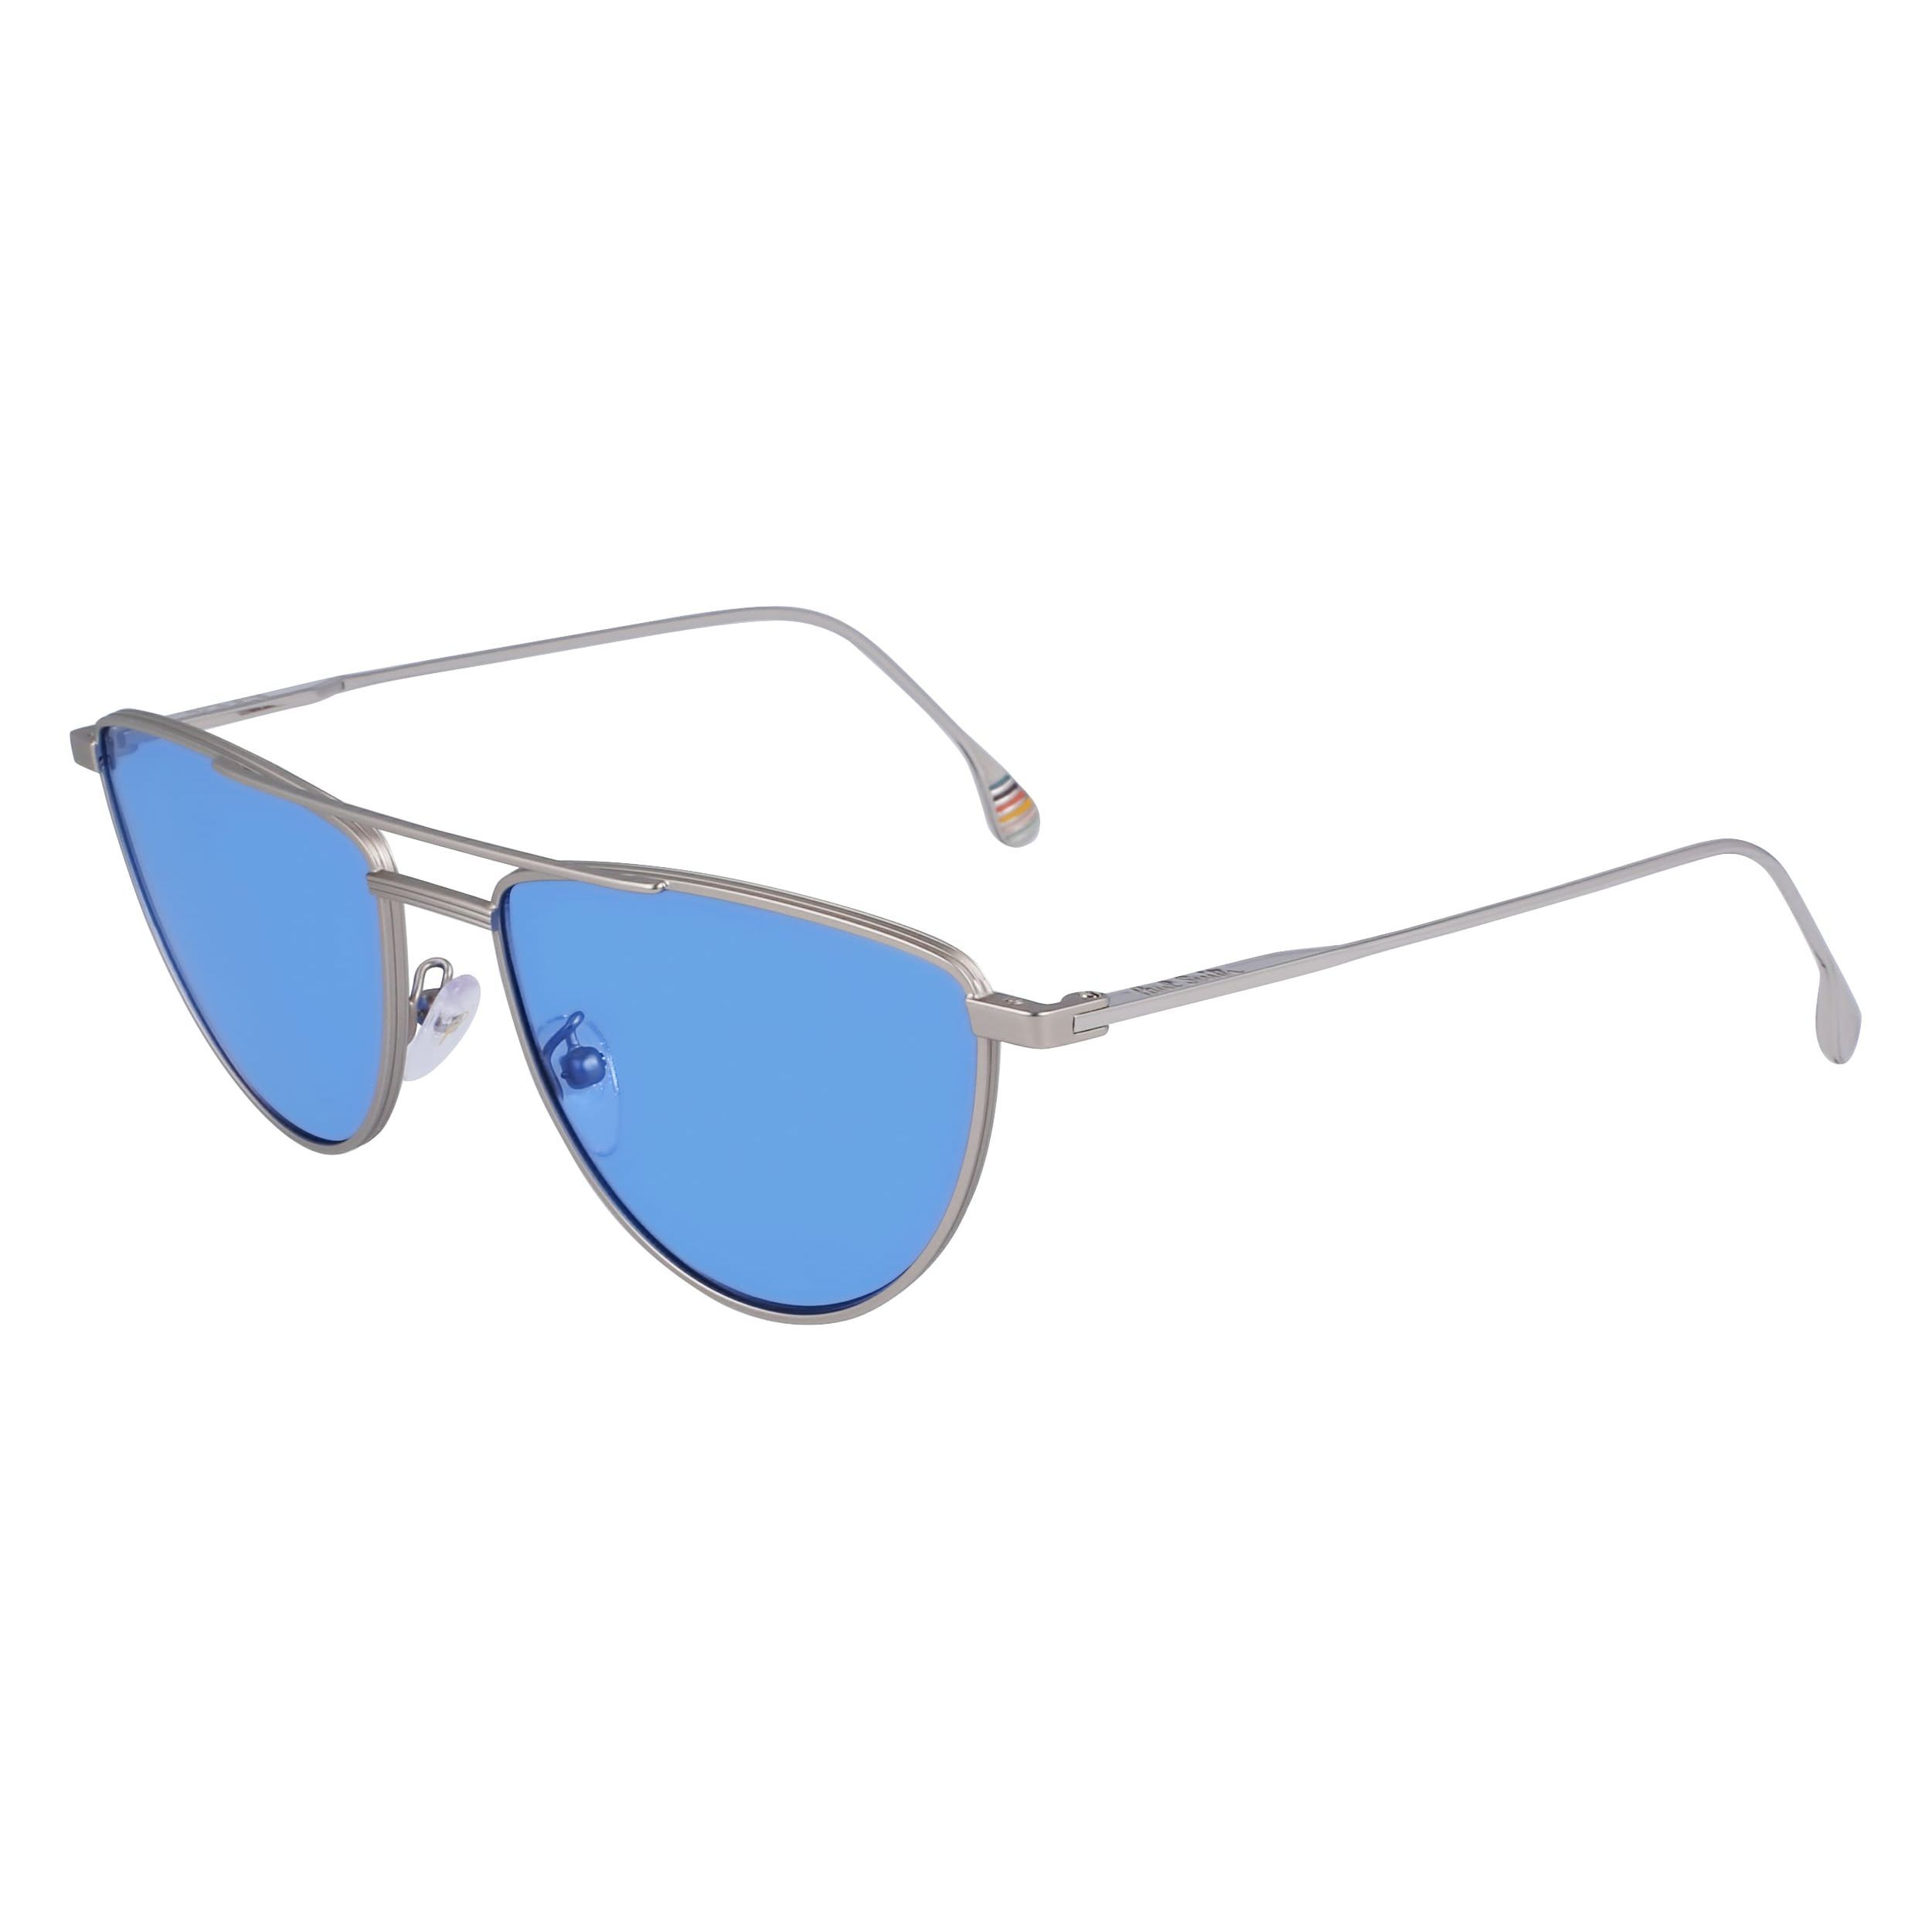 GARNER Pilot Sunglasses 005 - size 56